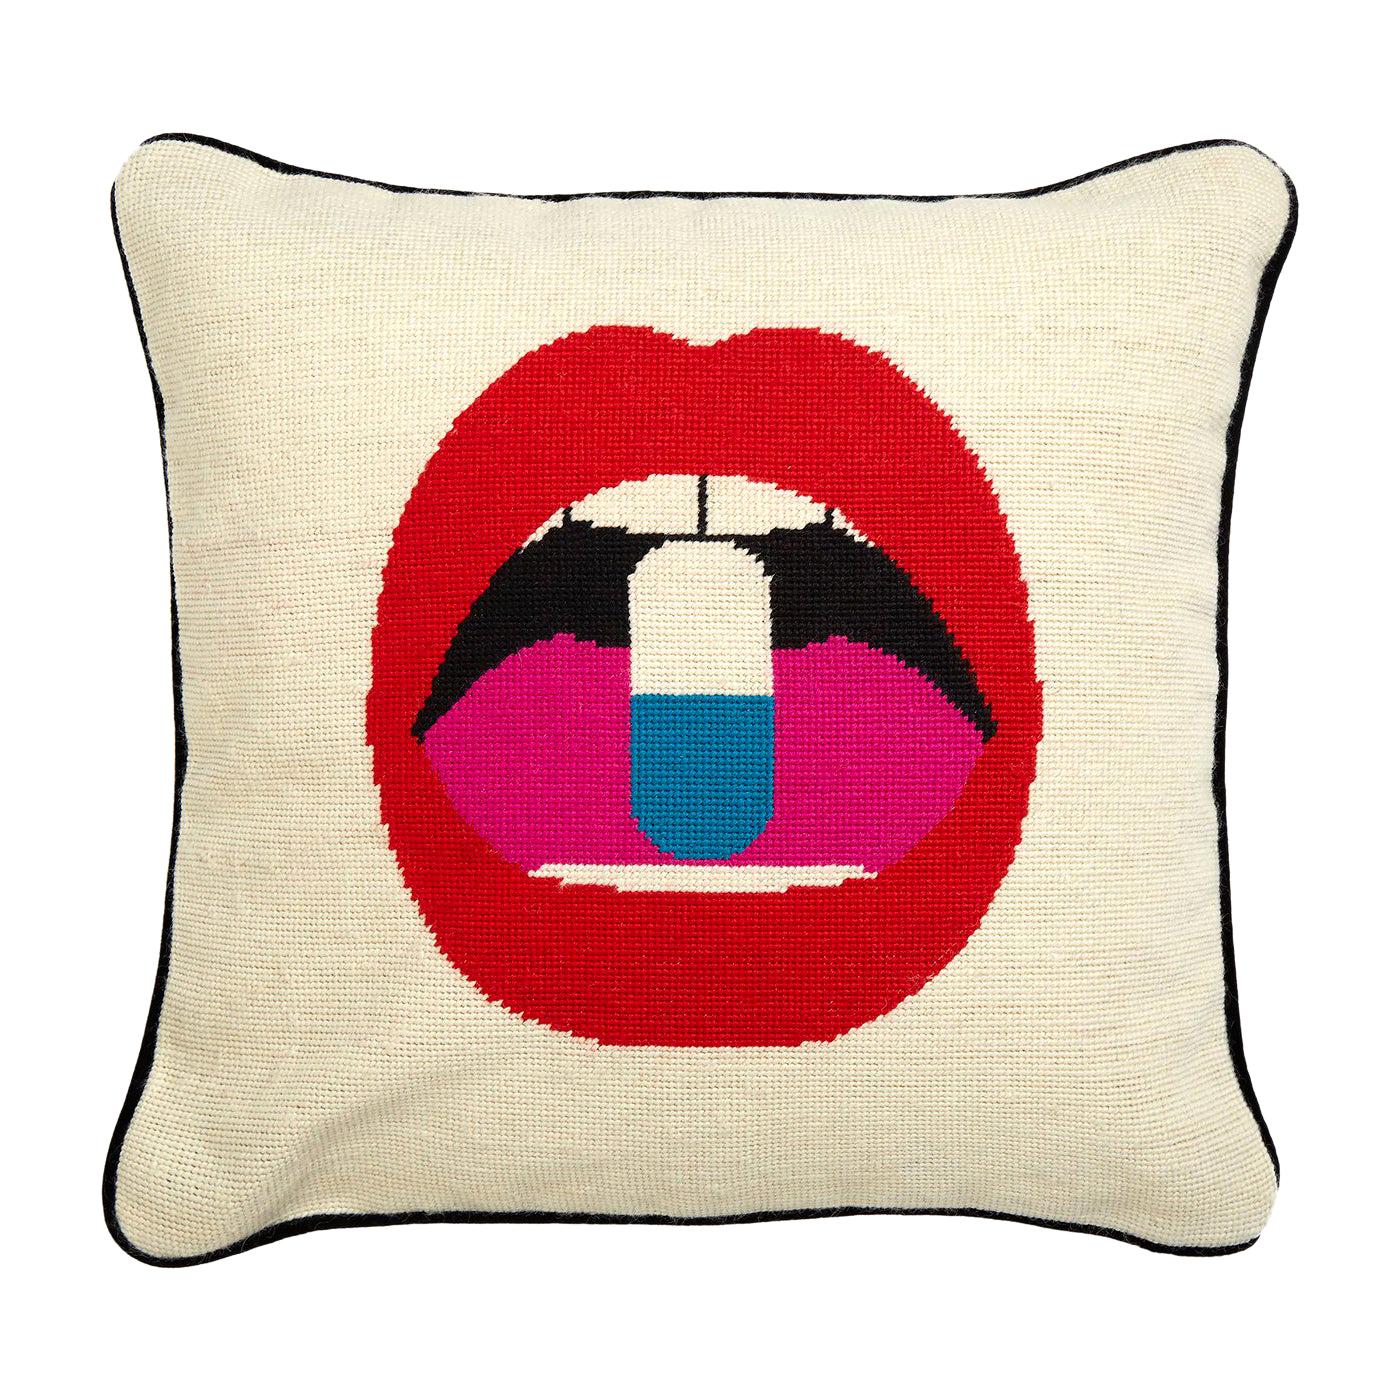 Lips ‘Full Dose’ Needlepoint Throw Pillow